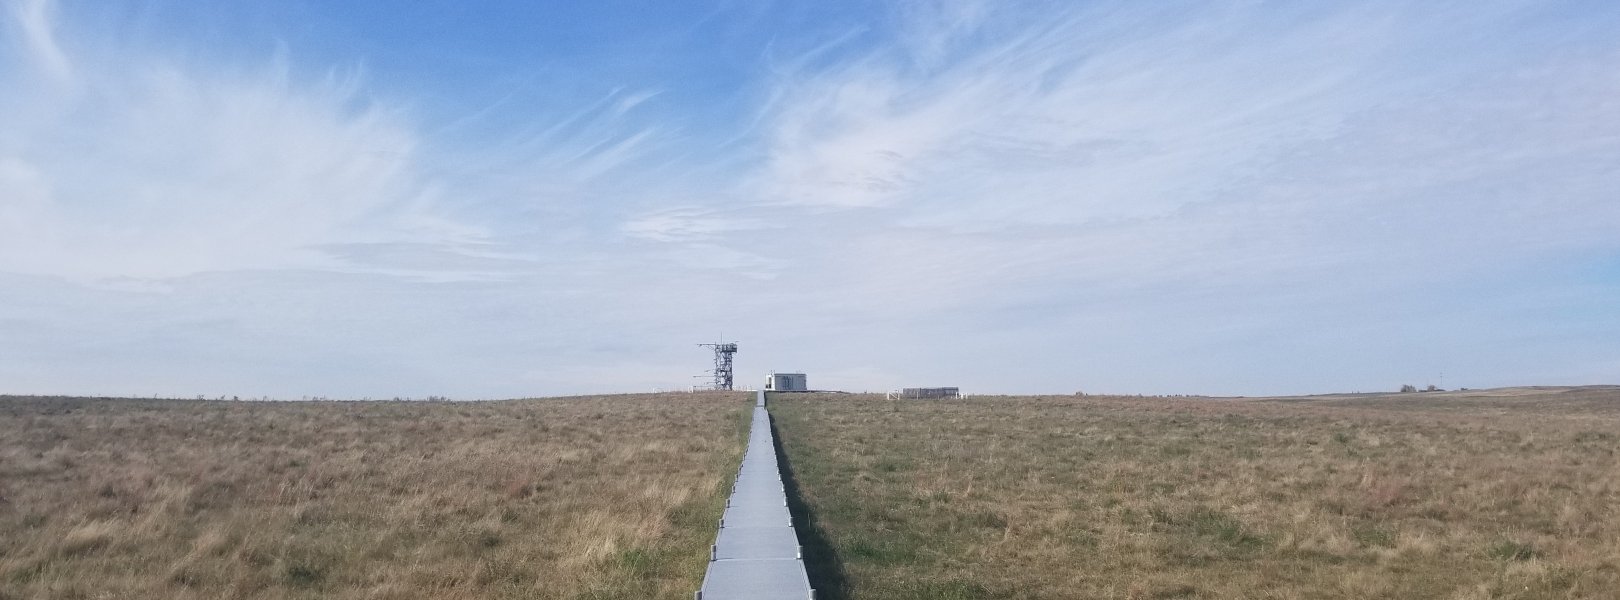 Flux tower at WOOD field site in North Dakota